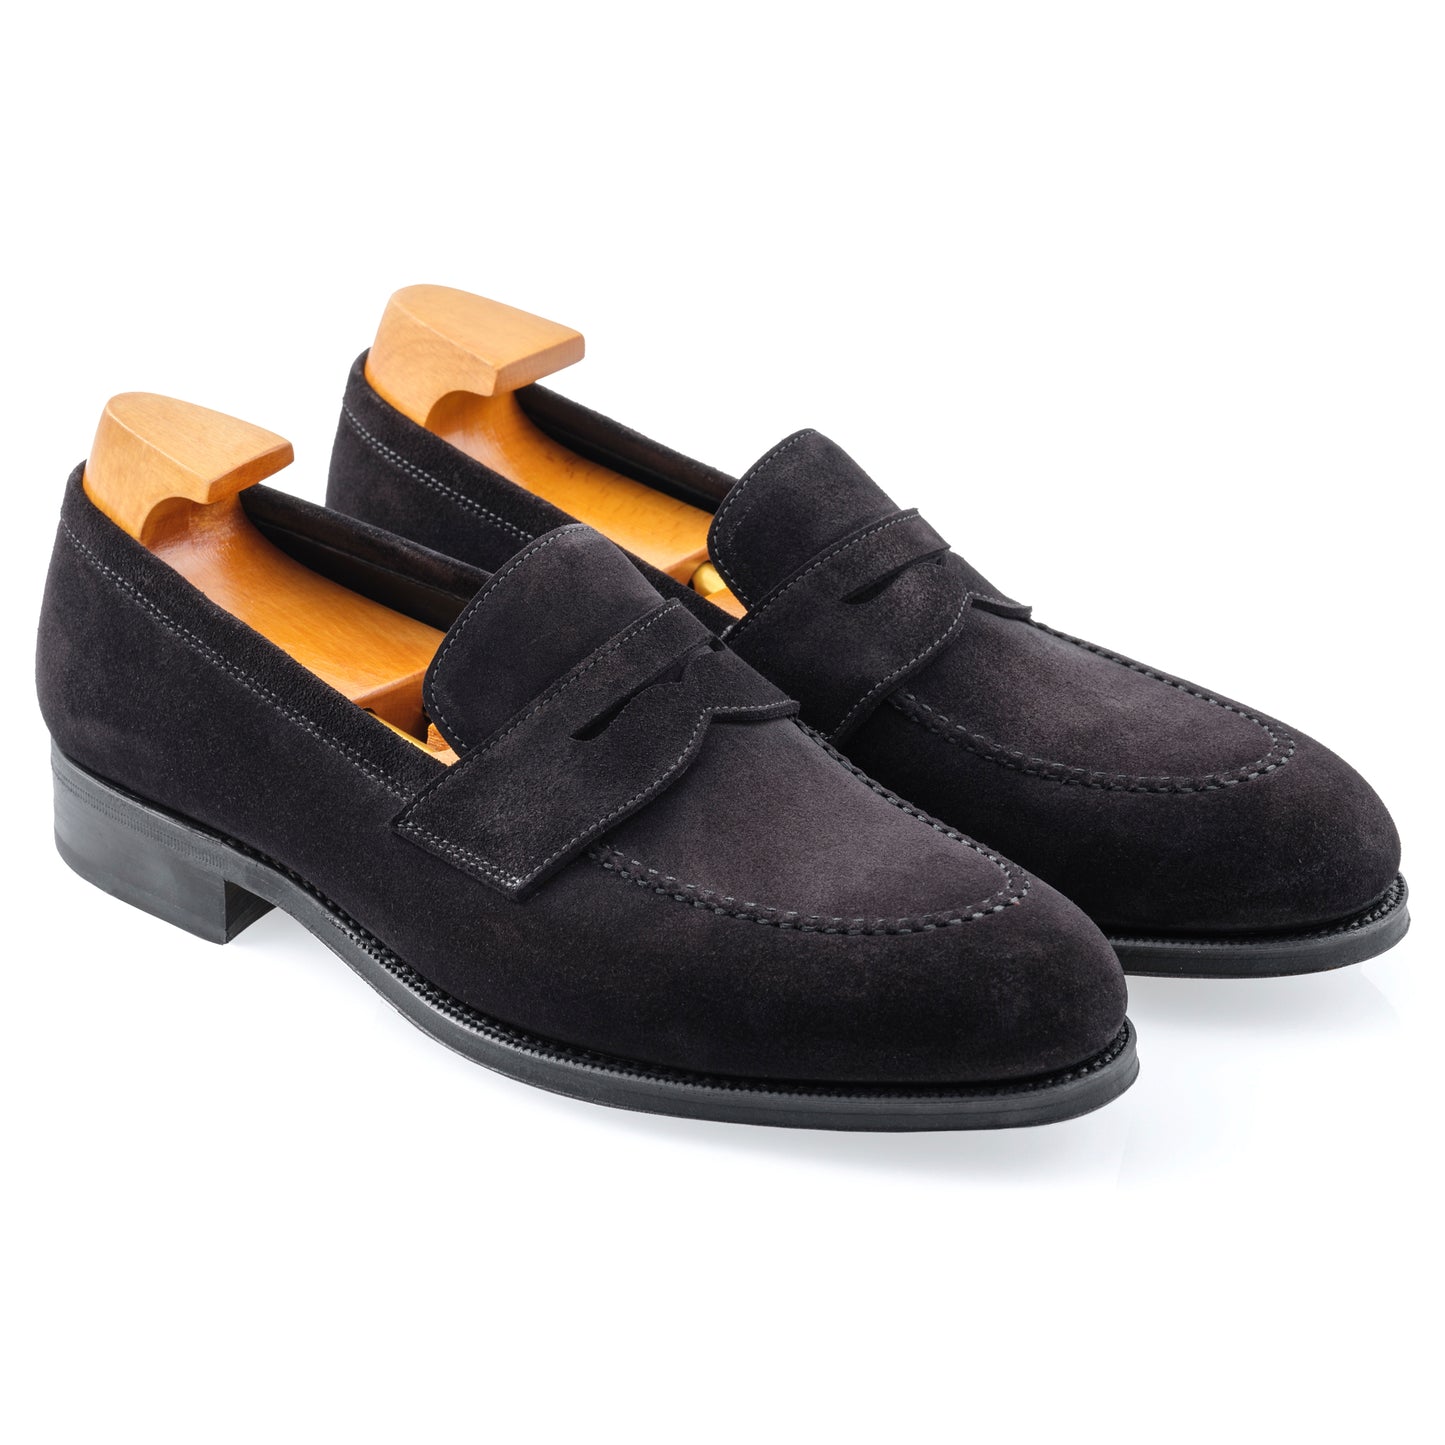 TLB Mallorca leather shoes 545 / JONES / SUEDE BLACK